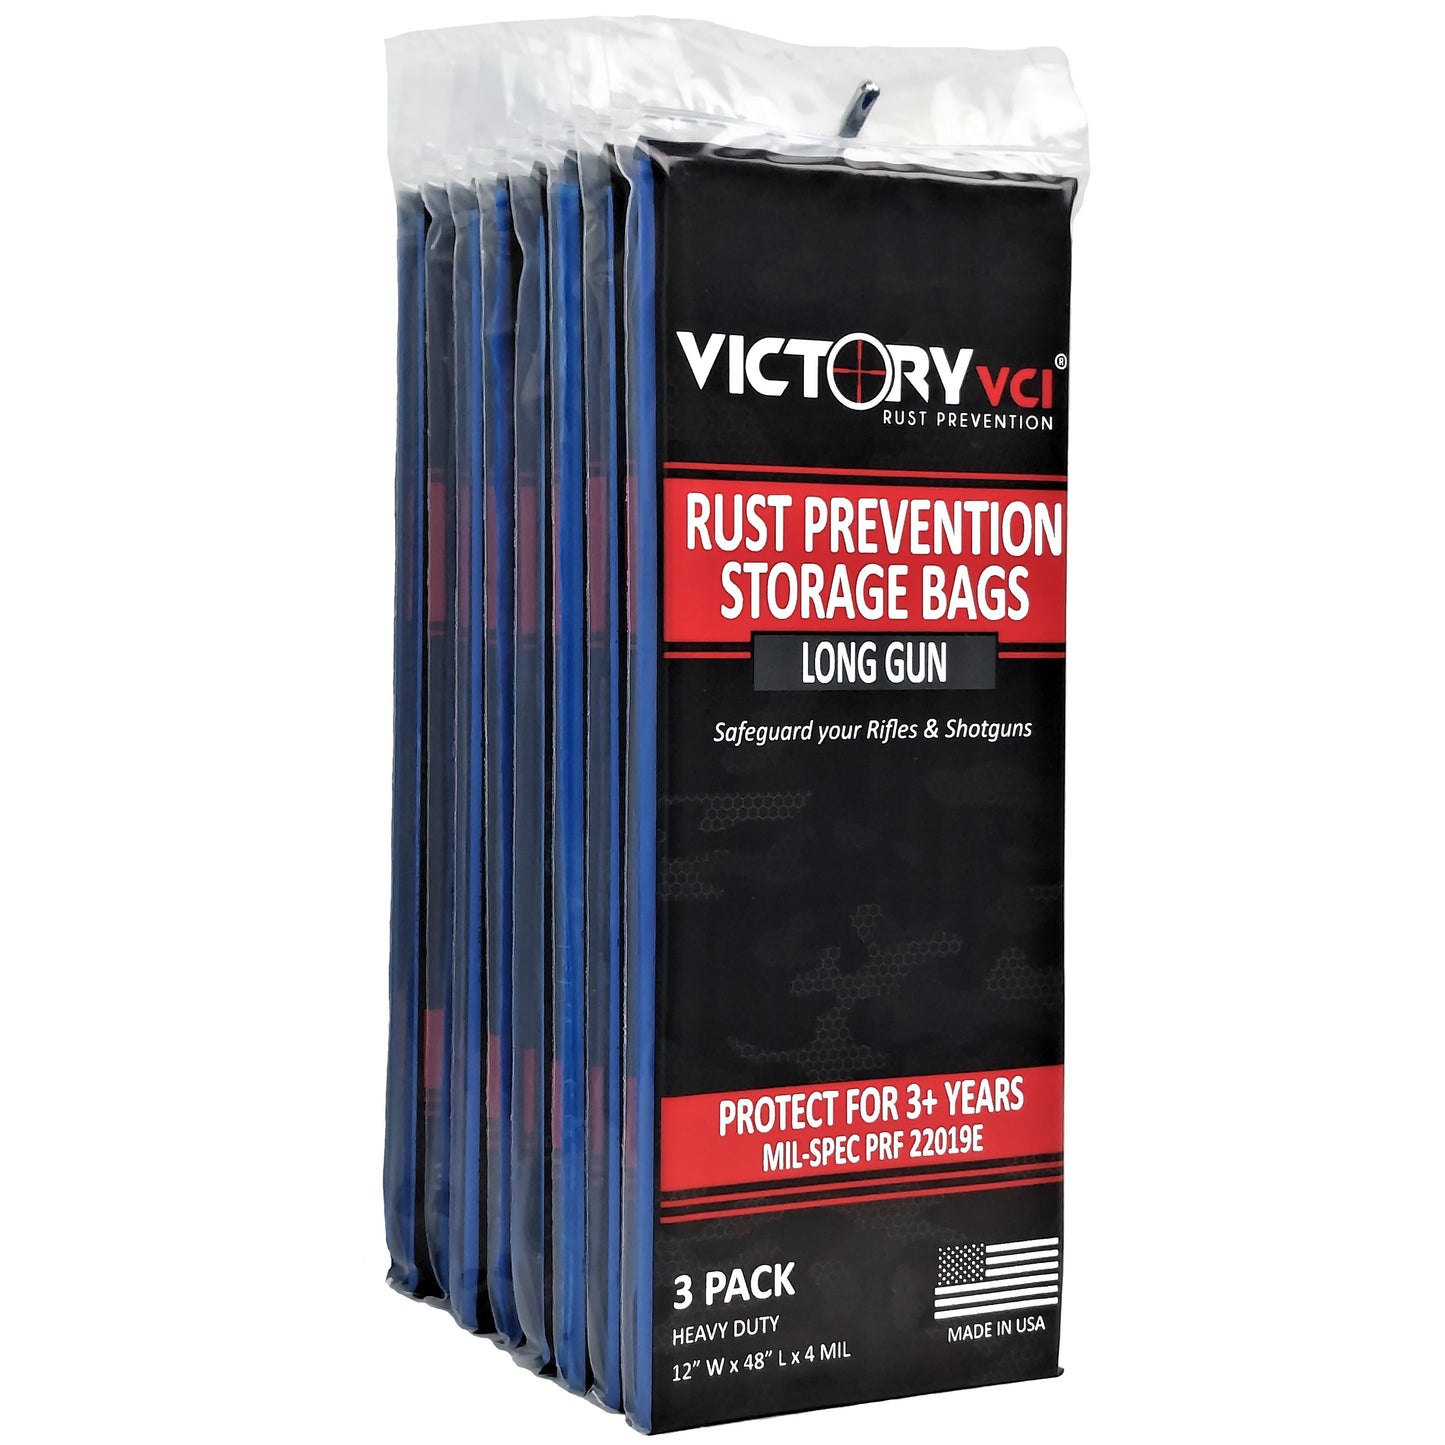 Victory VCI Rust Prevention Gun Storage Bags 12 x 48